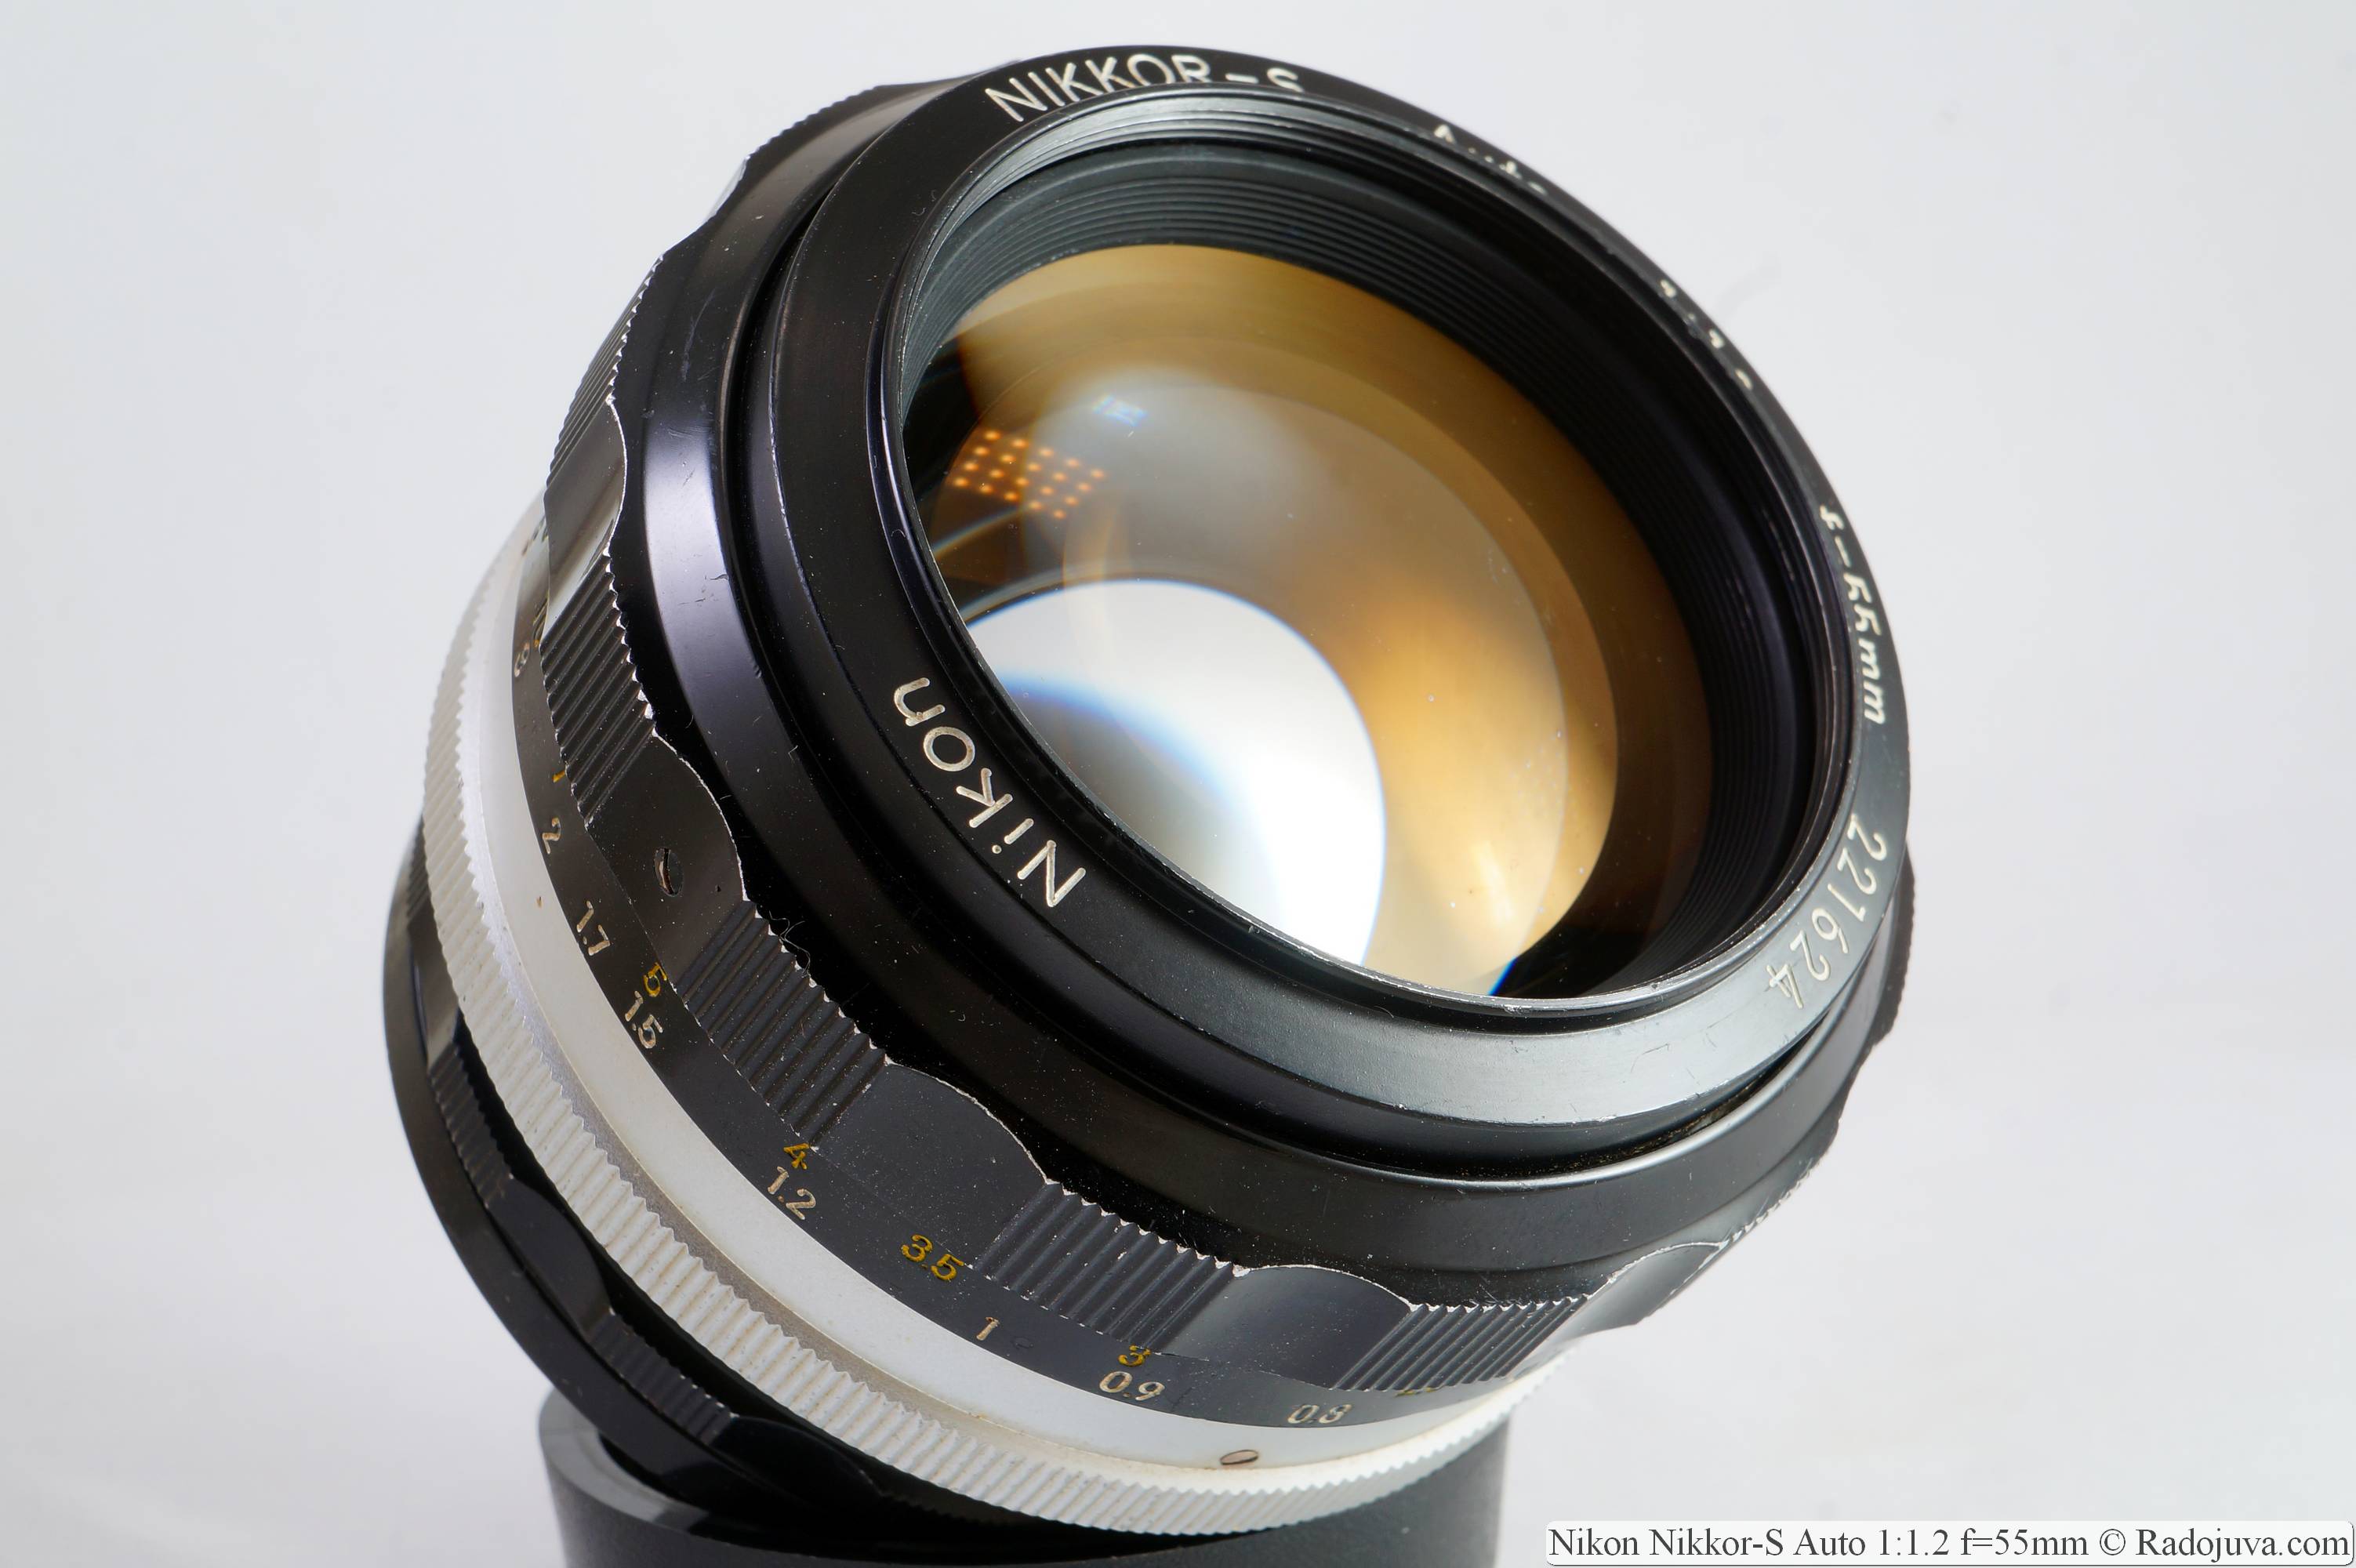  Nikon Nikkor-S Auto 1:1.2 f=55mm